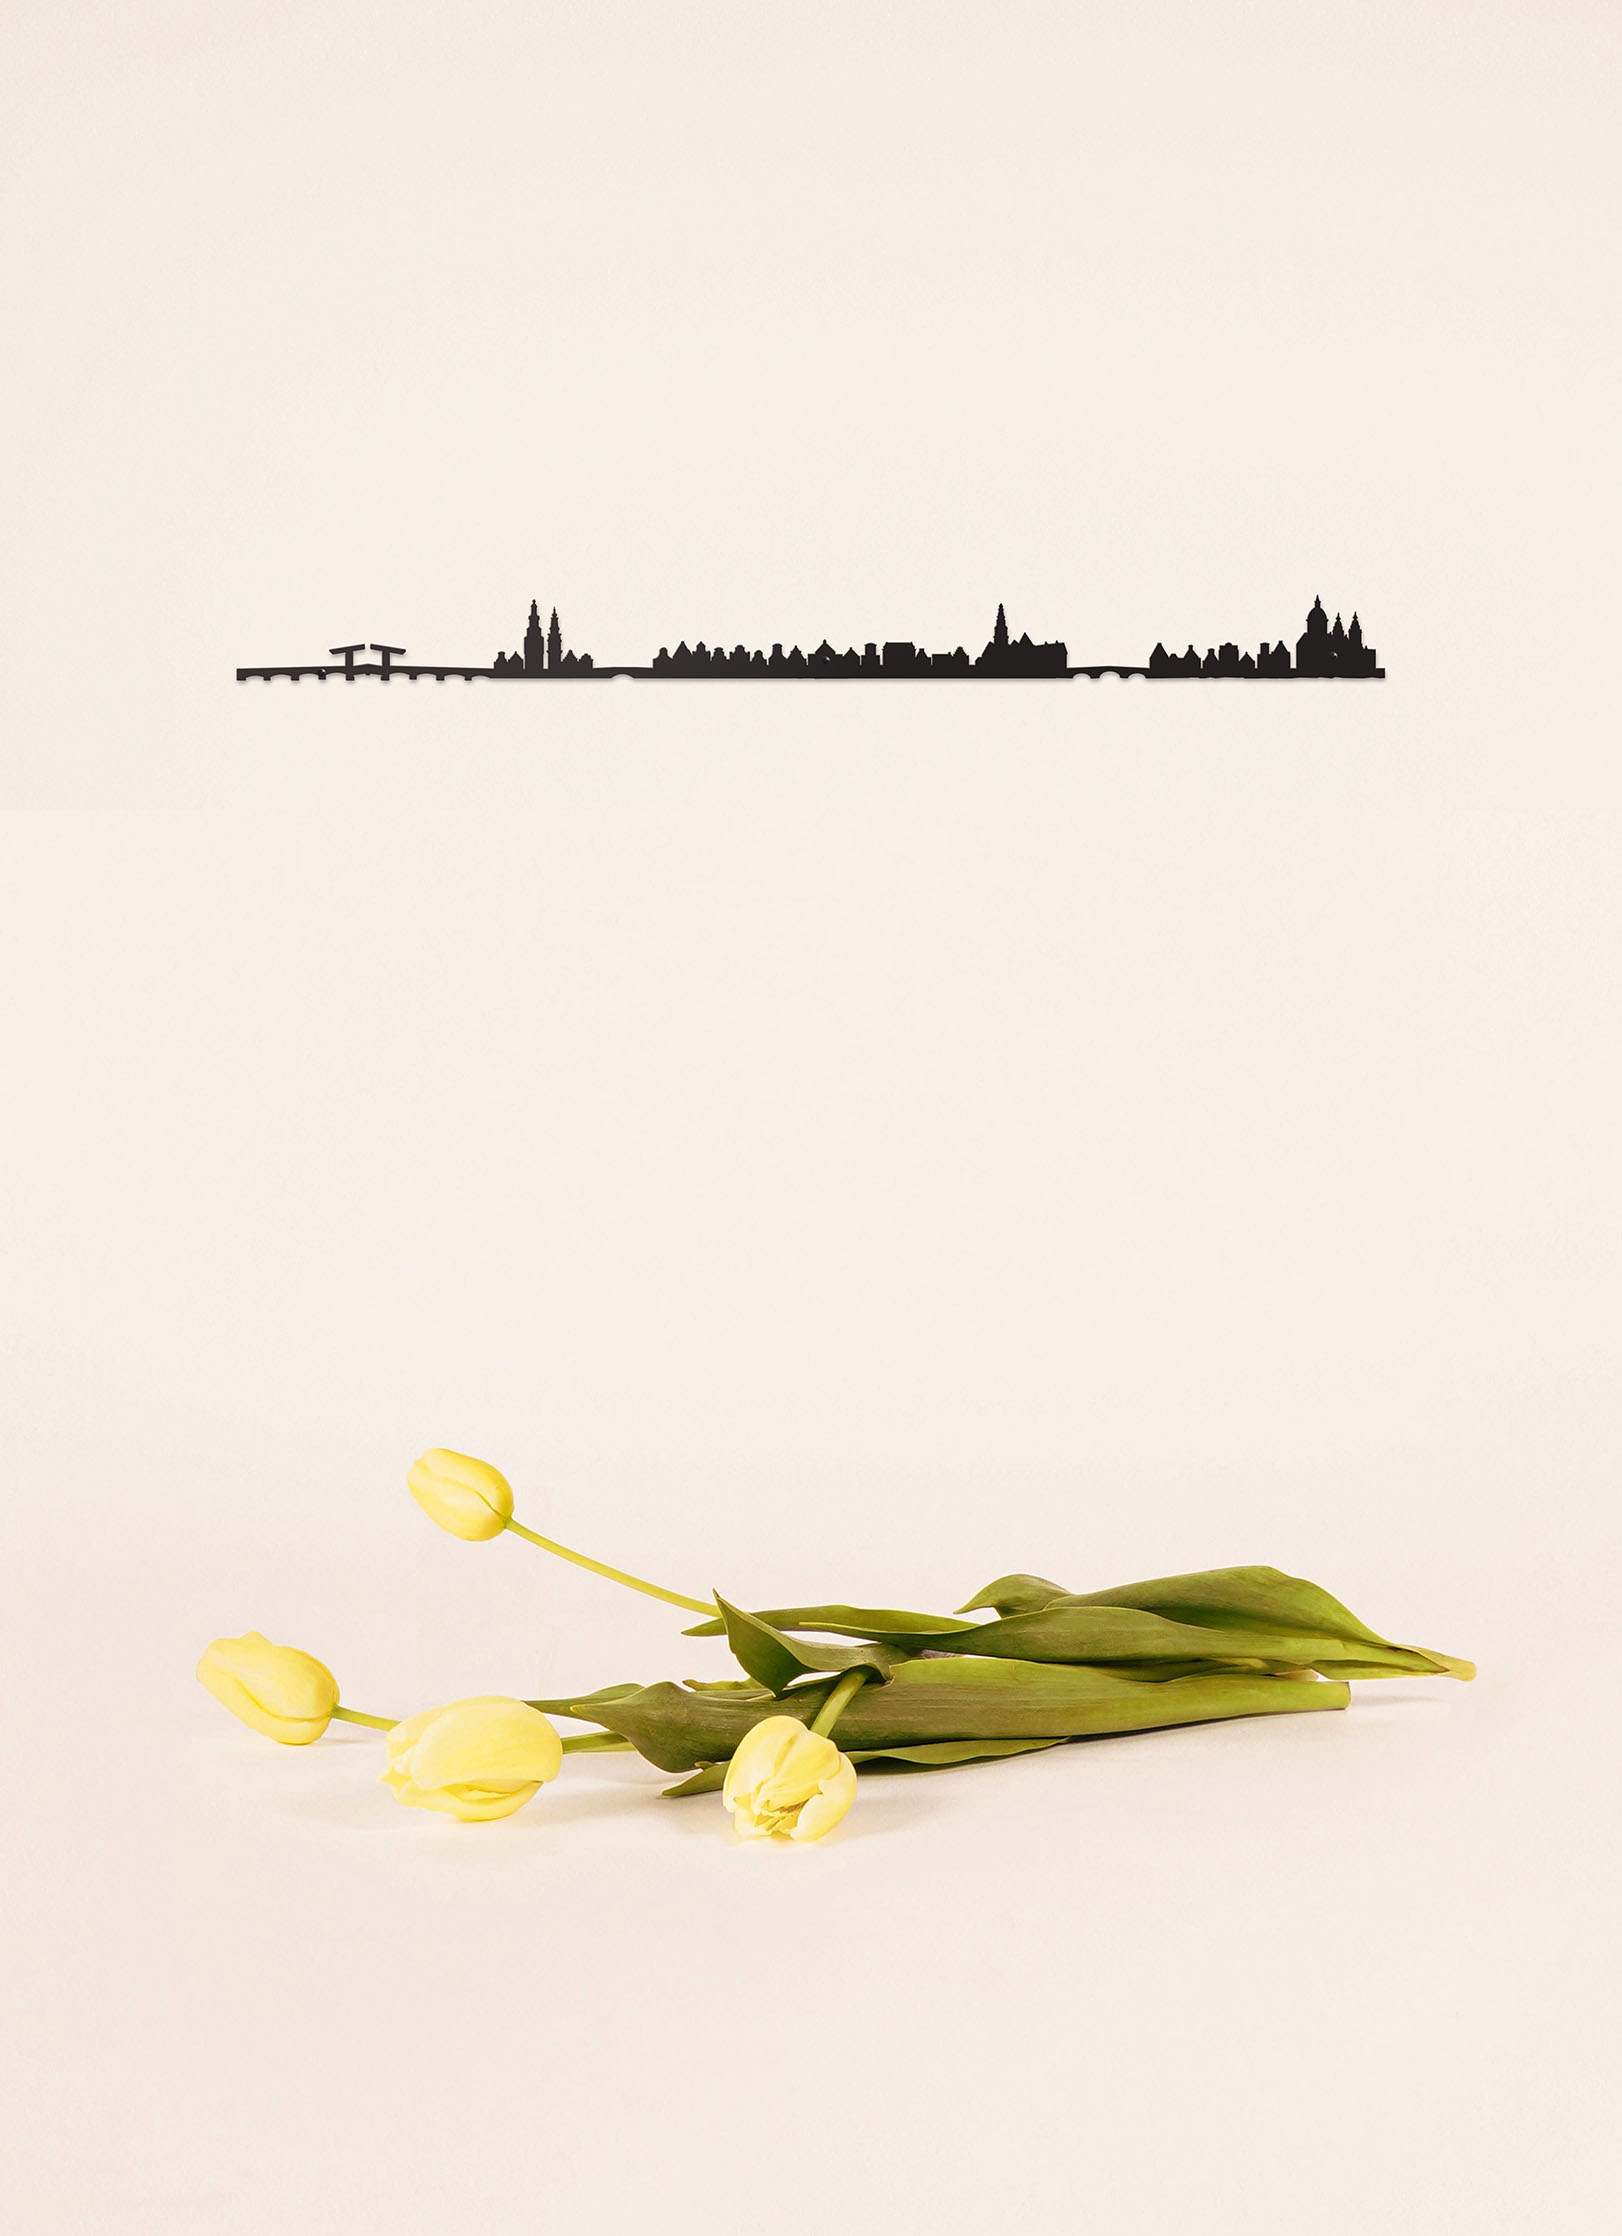 Cliché skyline de Amsterdam